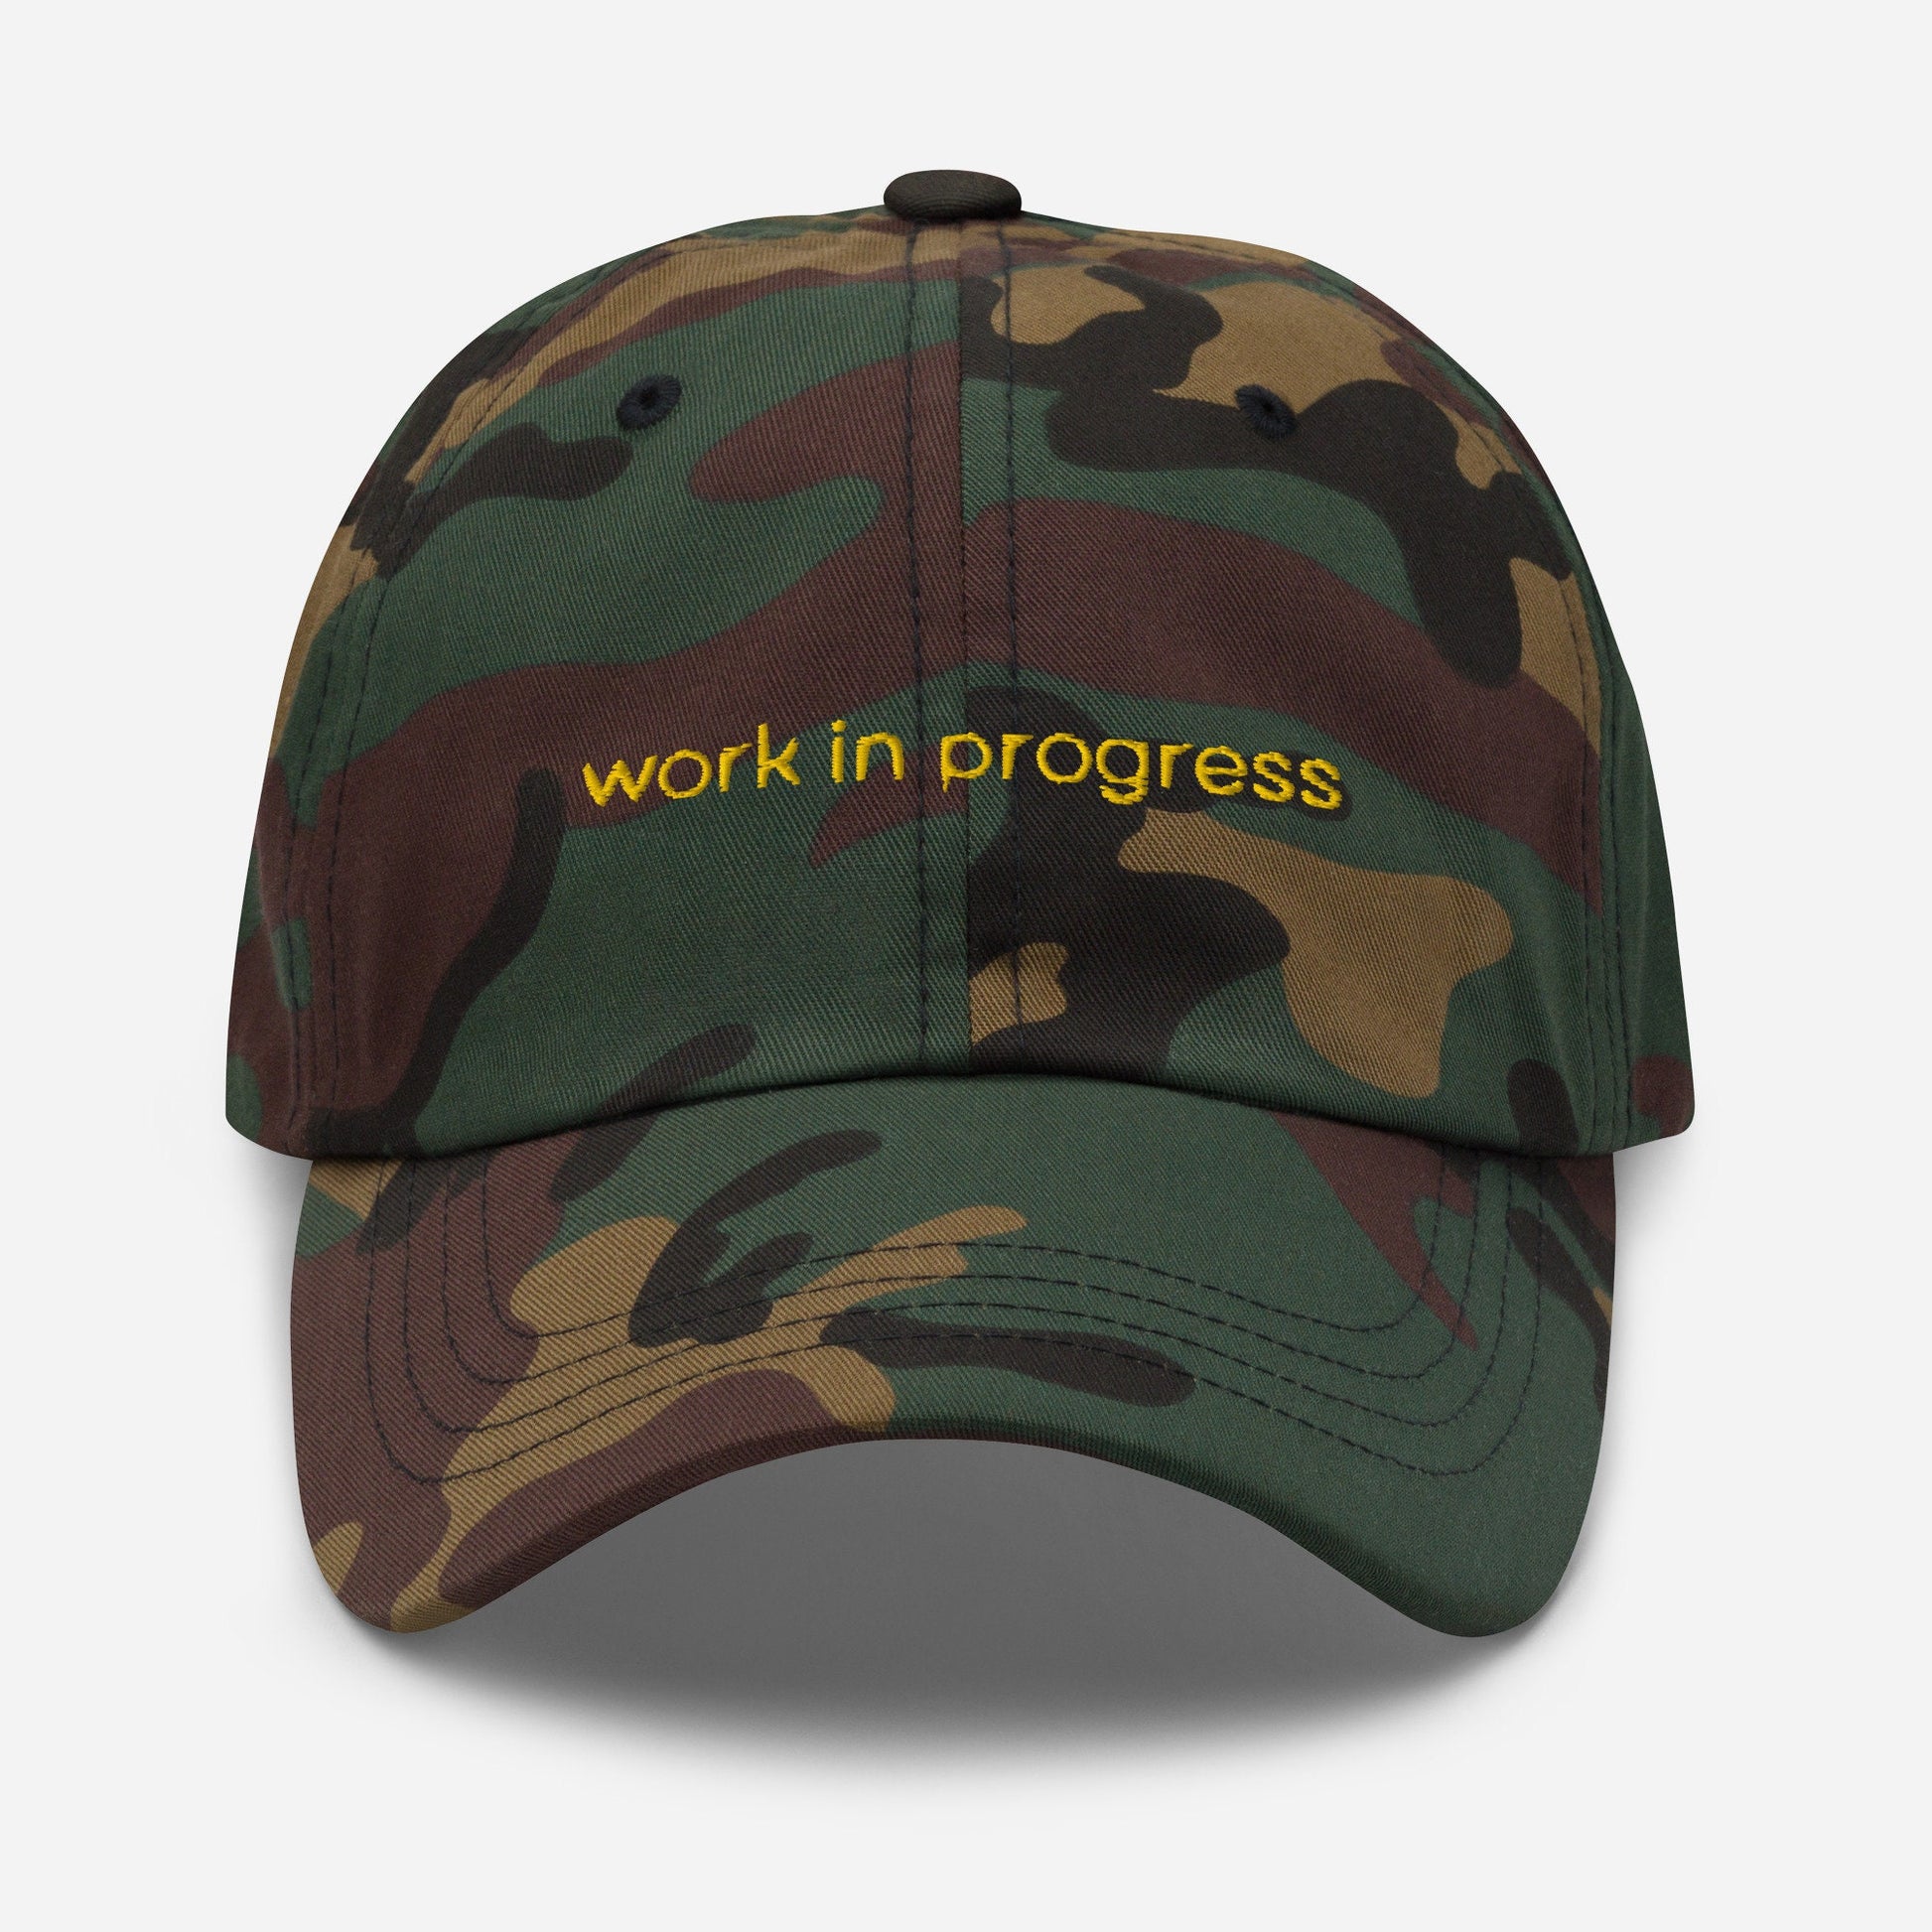 Work in Progress Dad Hat - Motivation, self improvement, manifesting gift - Handmade Embroidered Cotton Cap